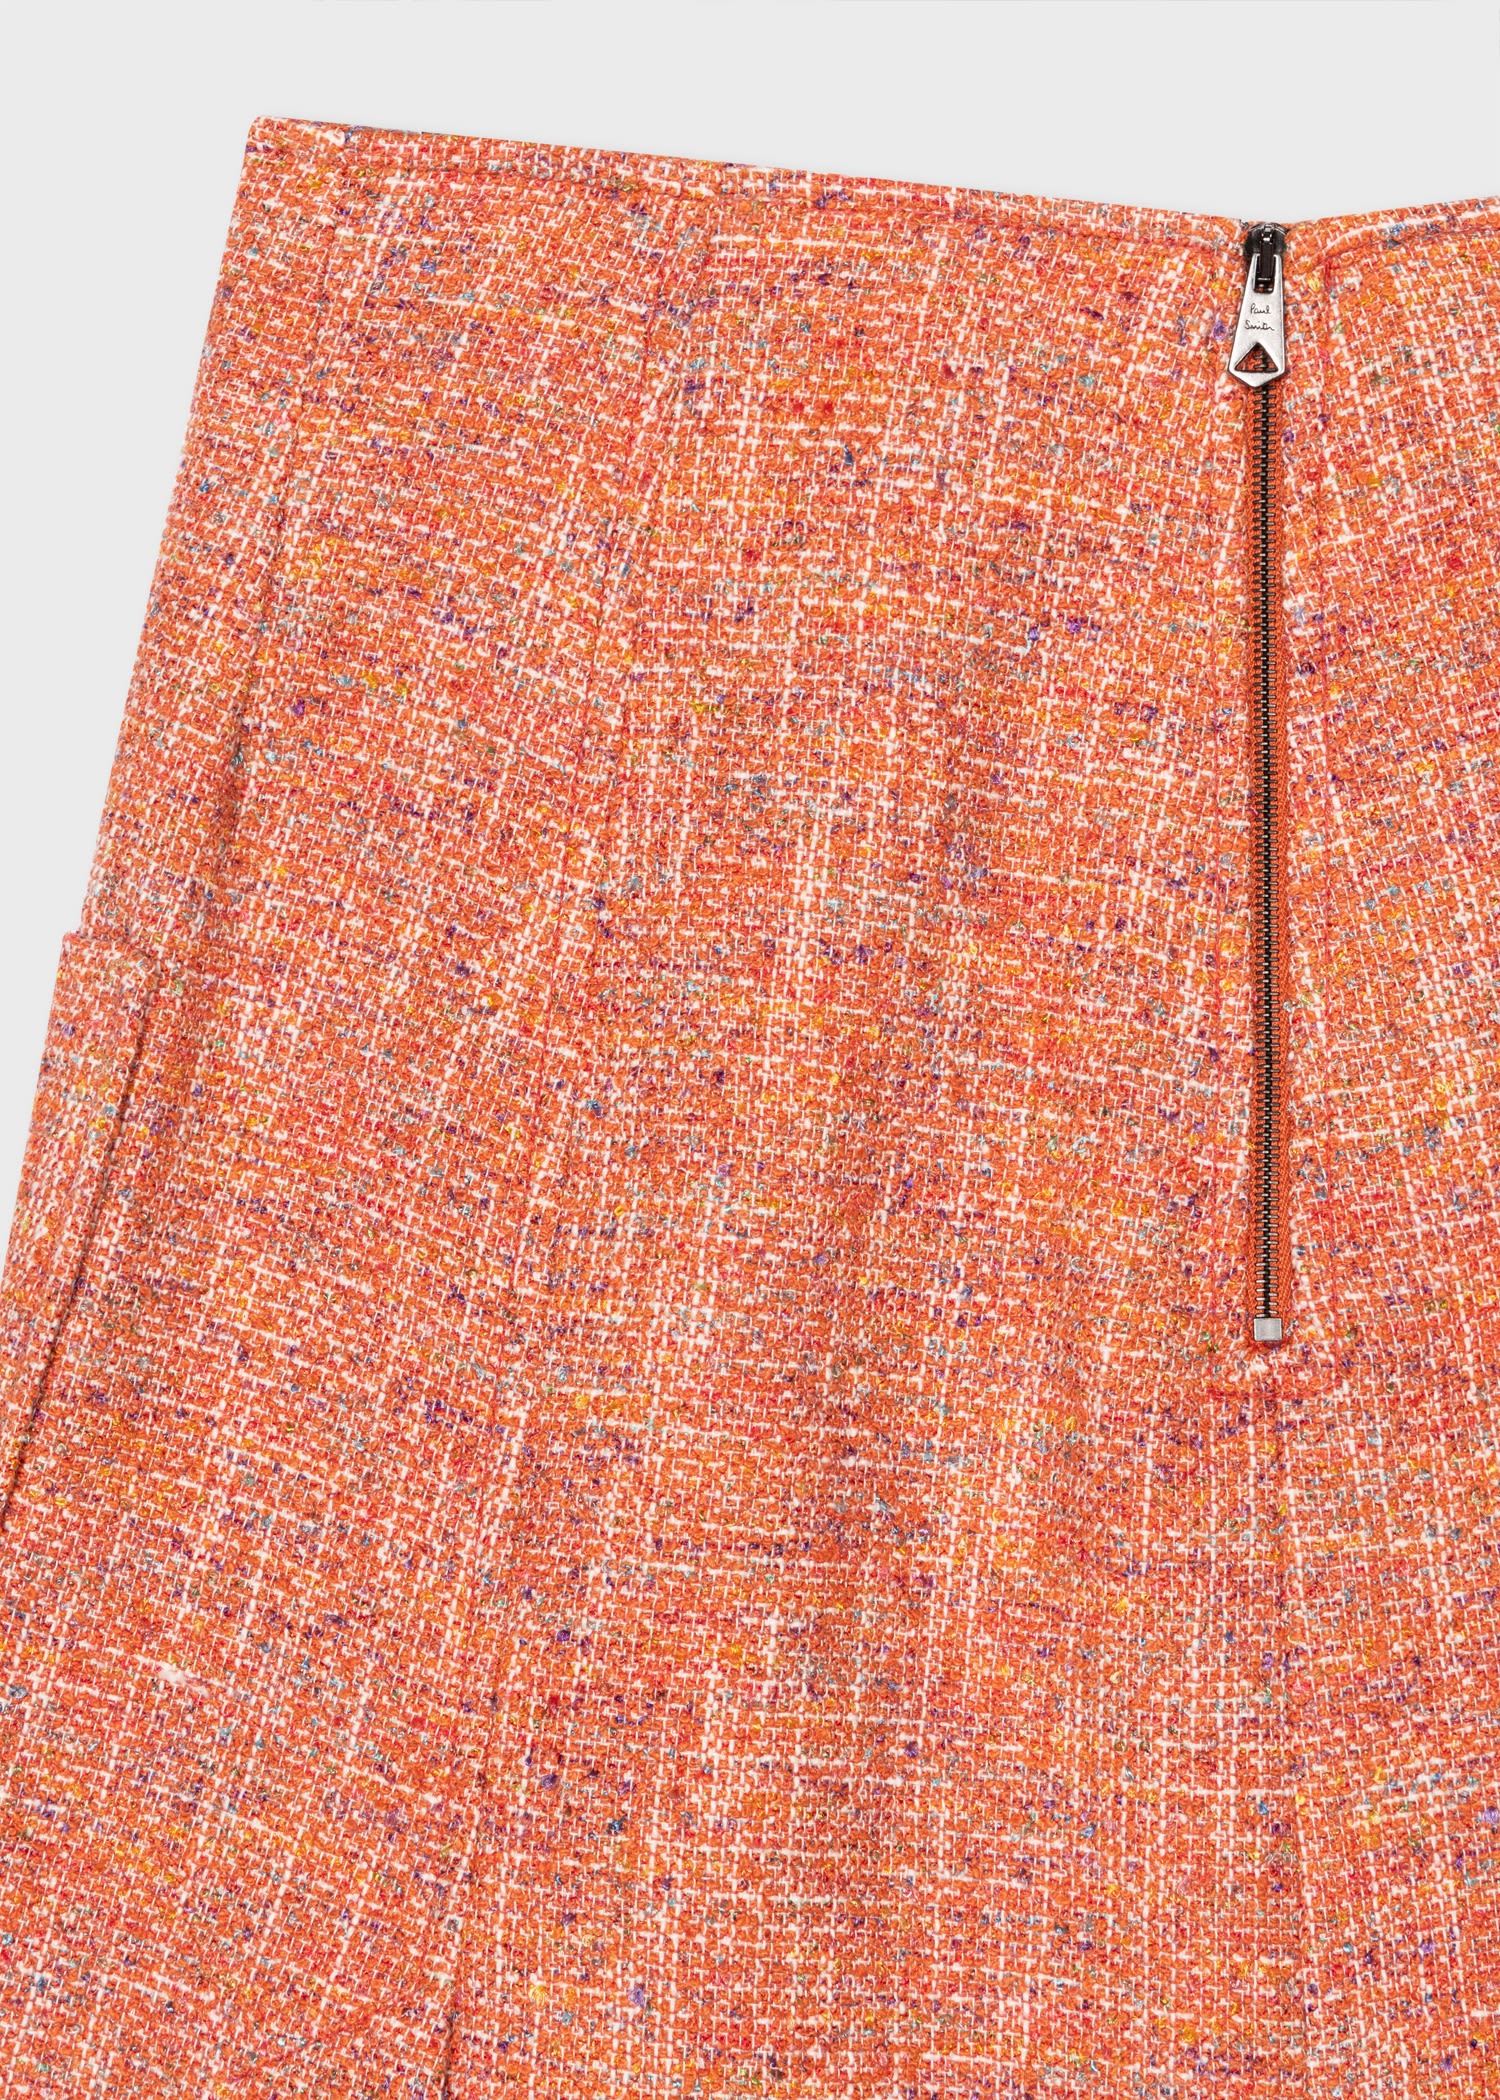 Tweed Cocoon Skirt Suit - 6